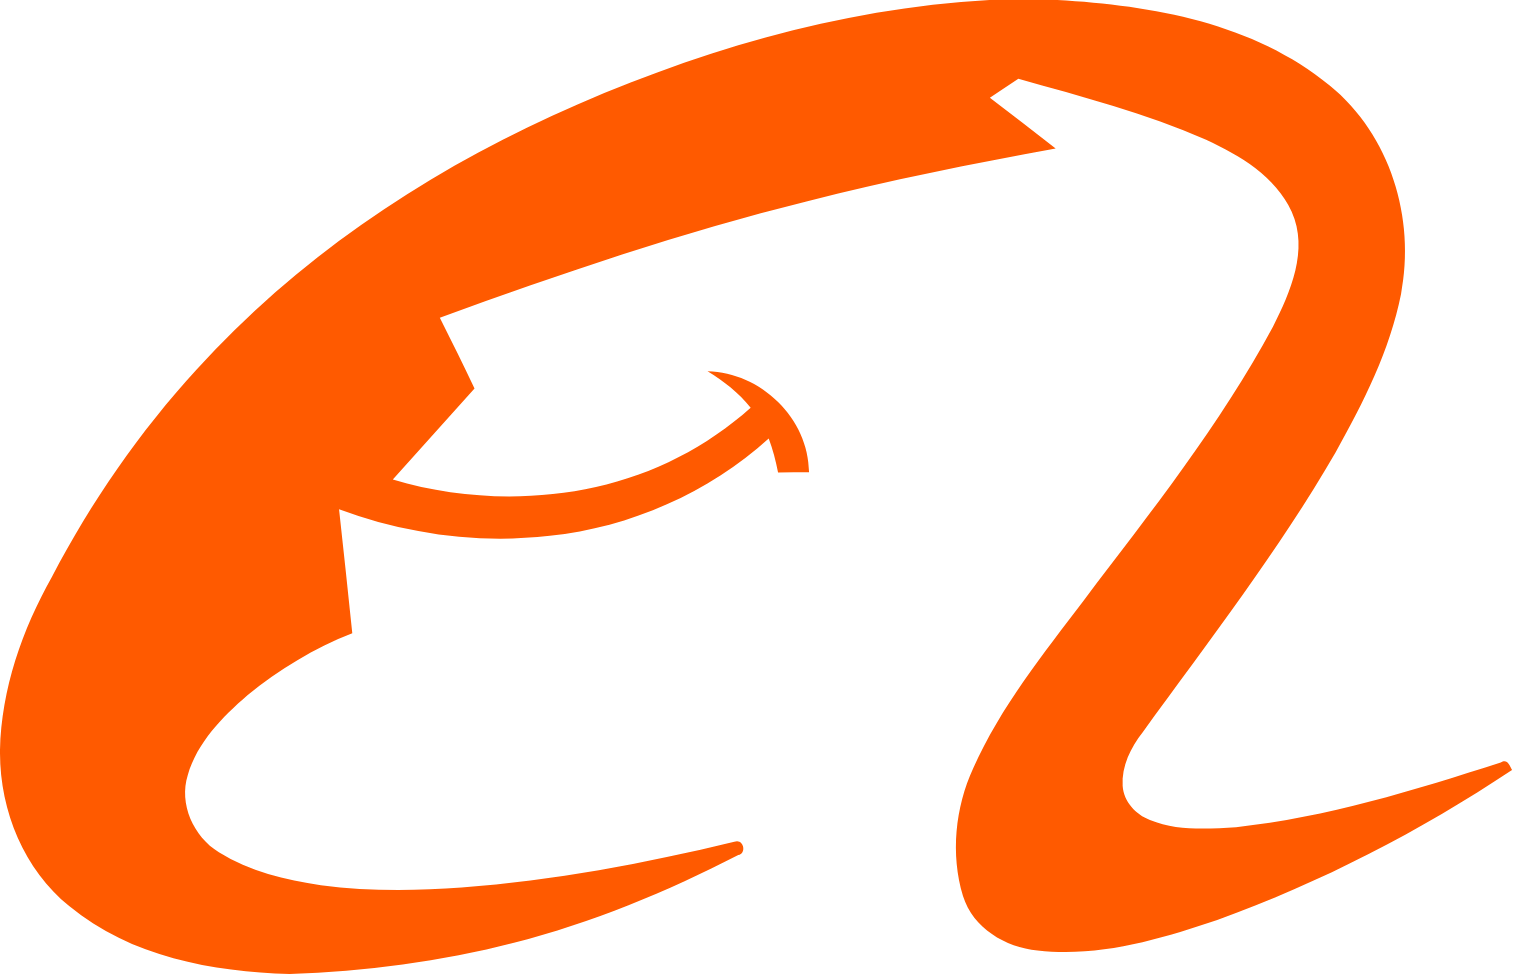 Alibaba logo - Social media & Logos Icons